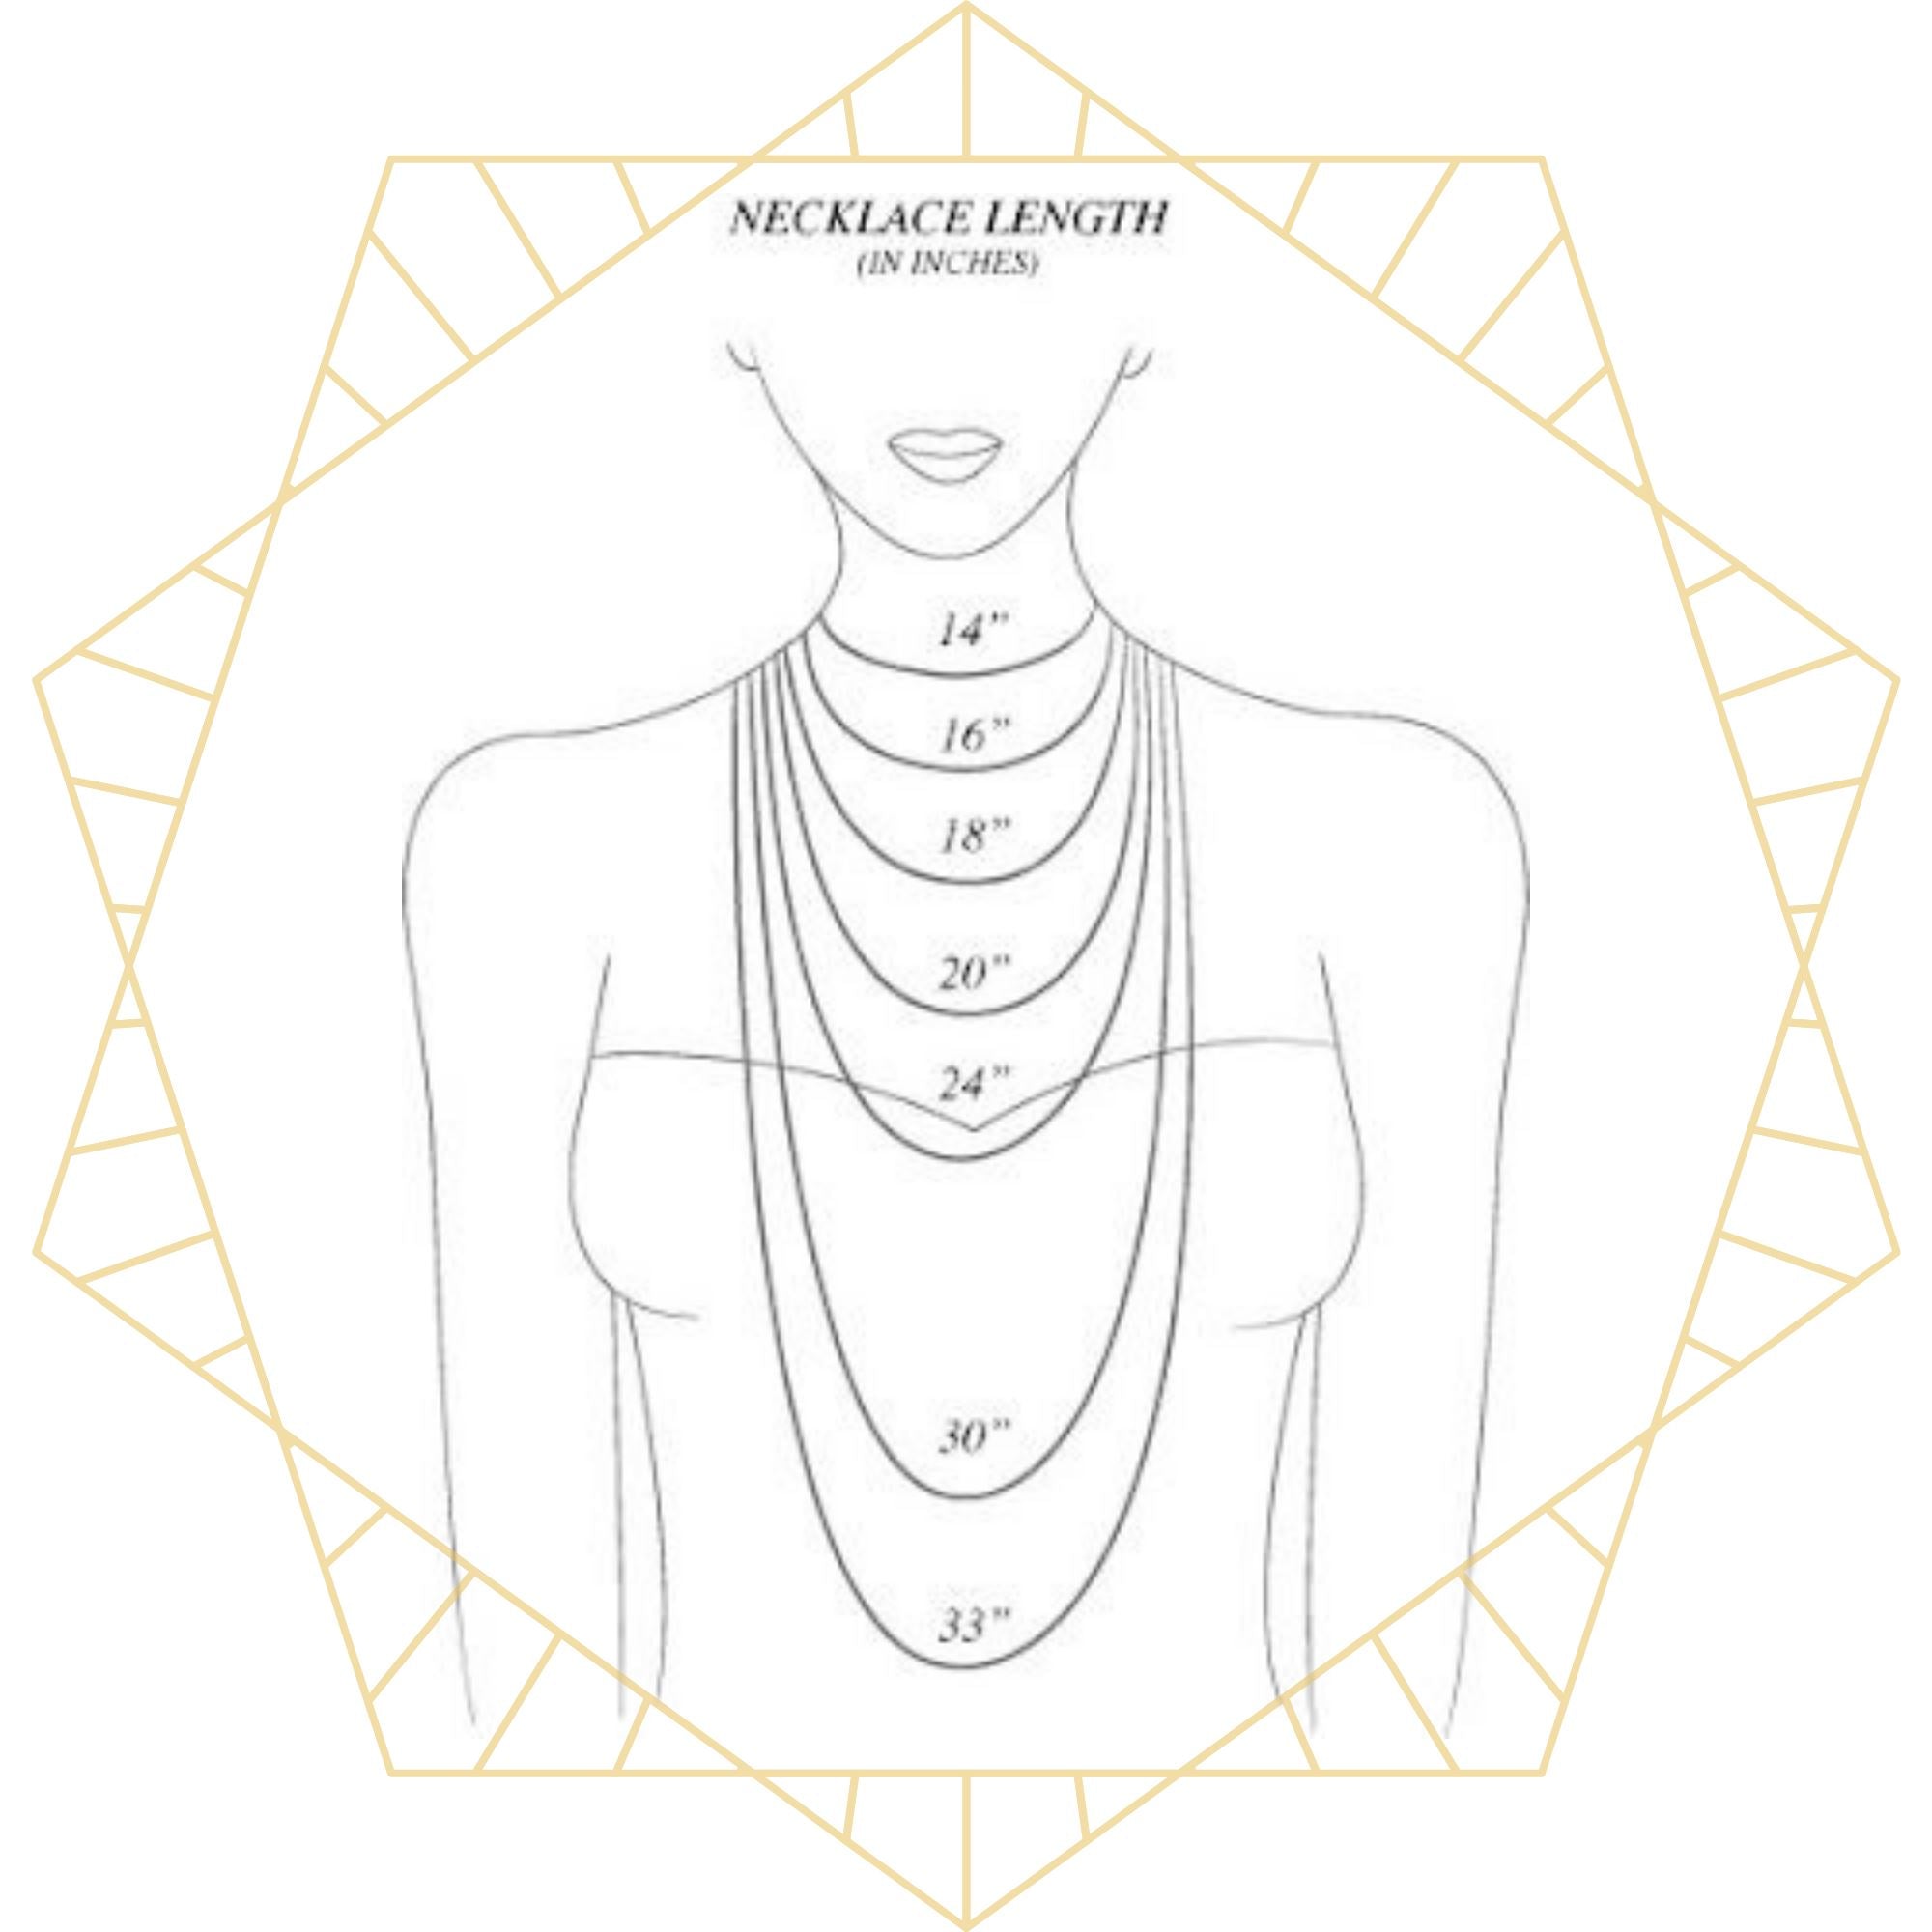 Rutile quartz crystal drop necklace - gold filled - Aislinn collection necklace Amanda K Lockrow 